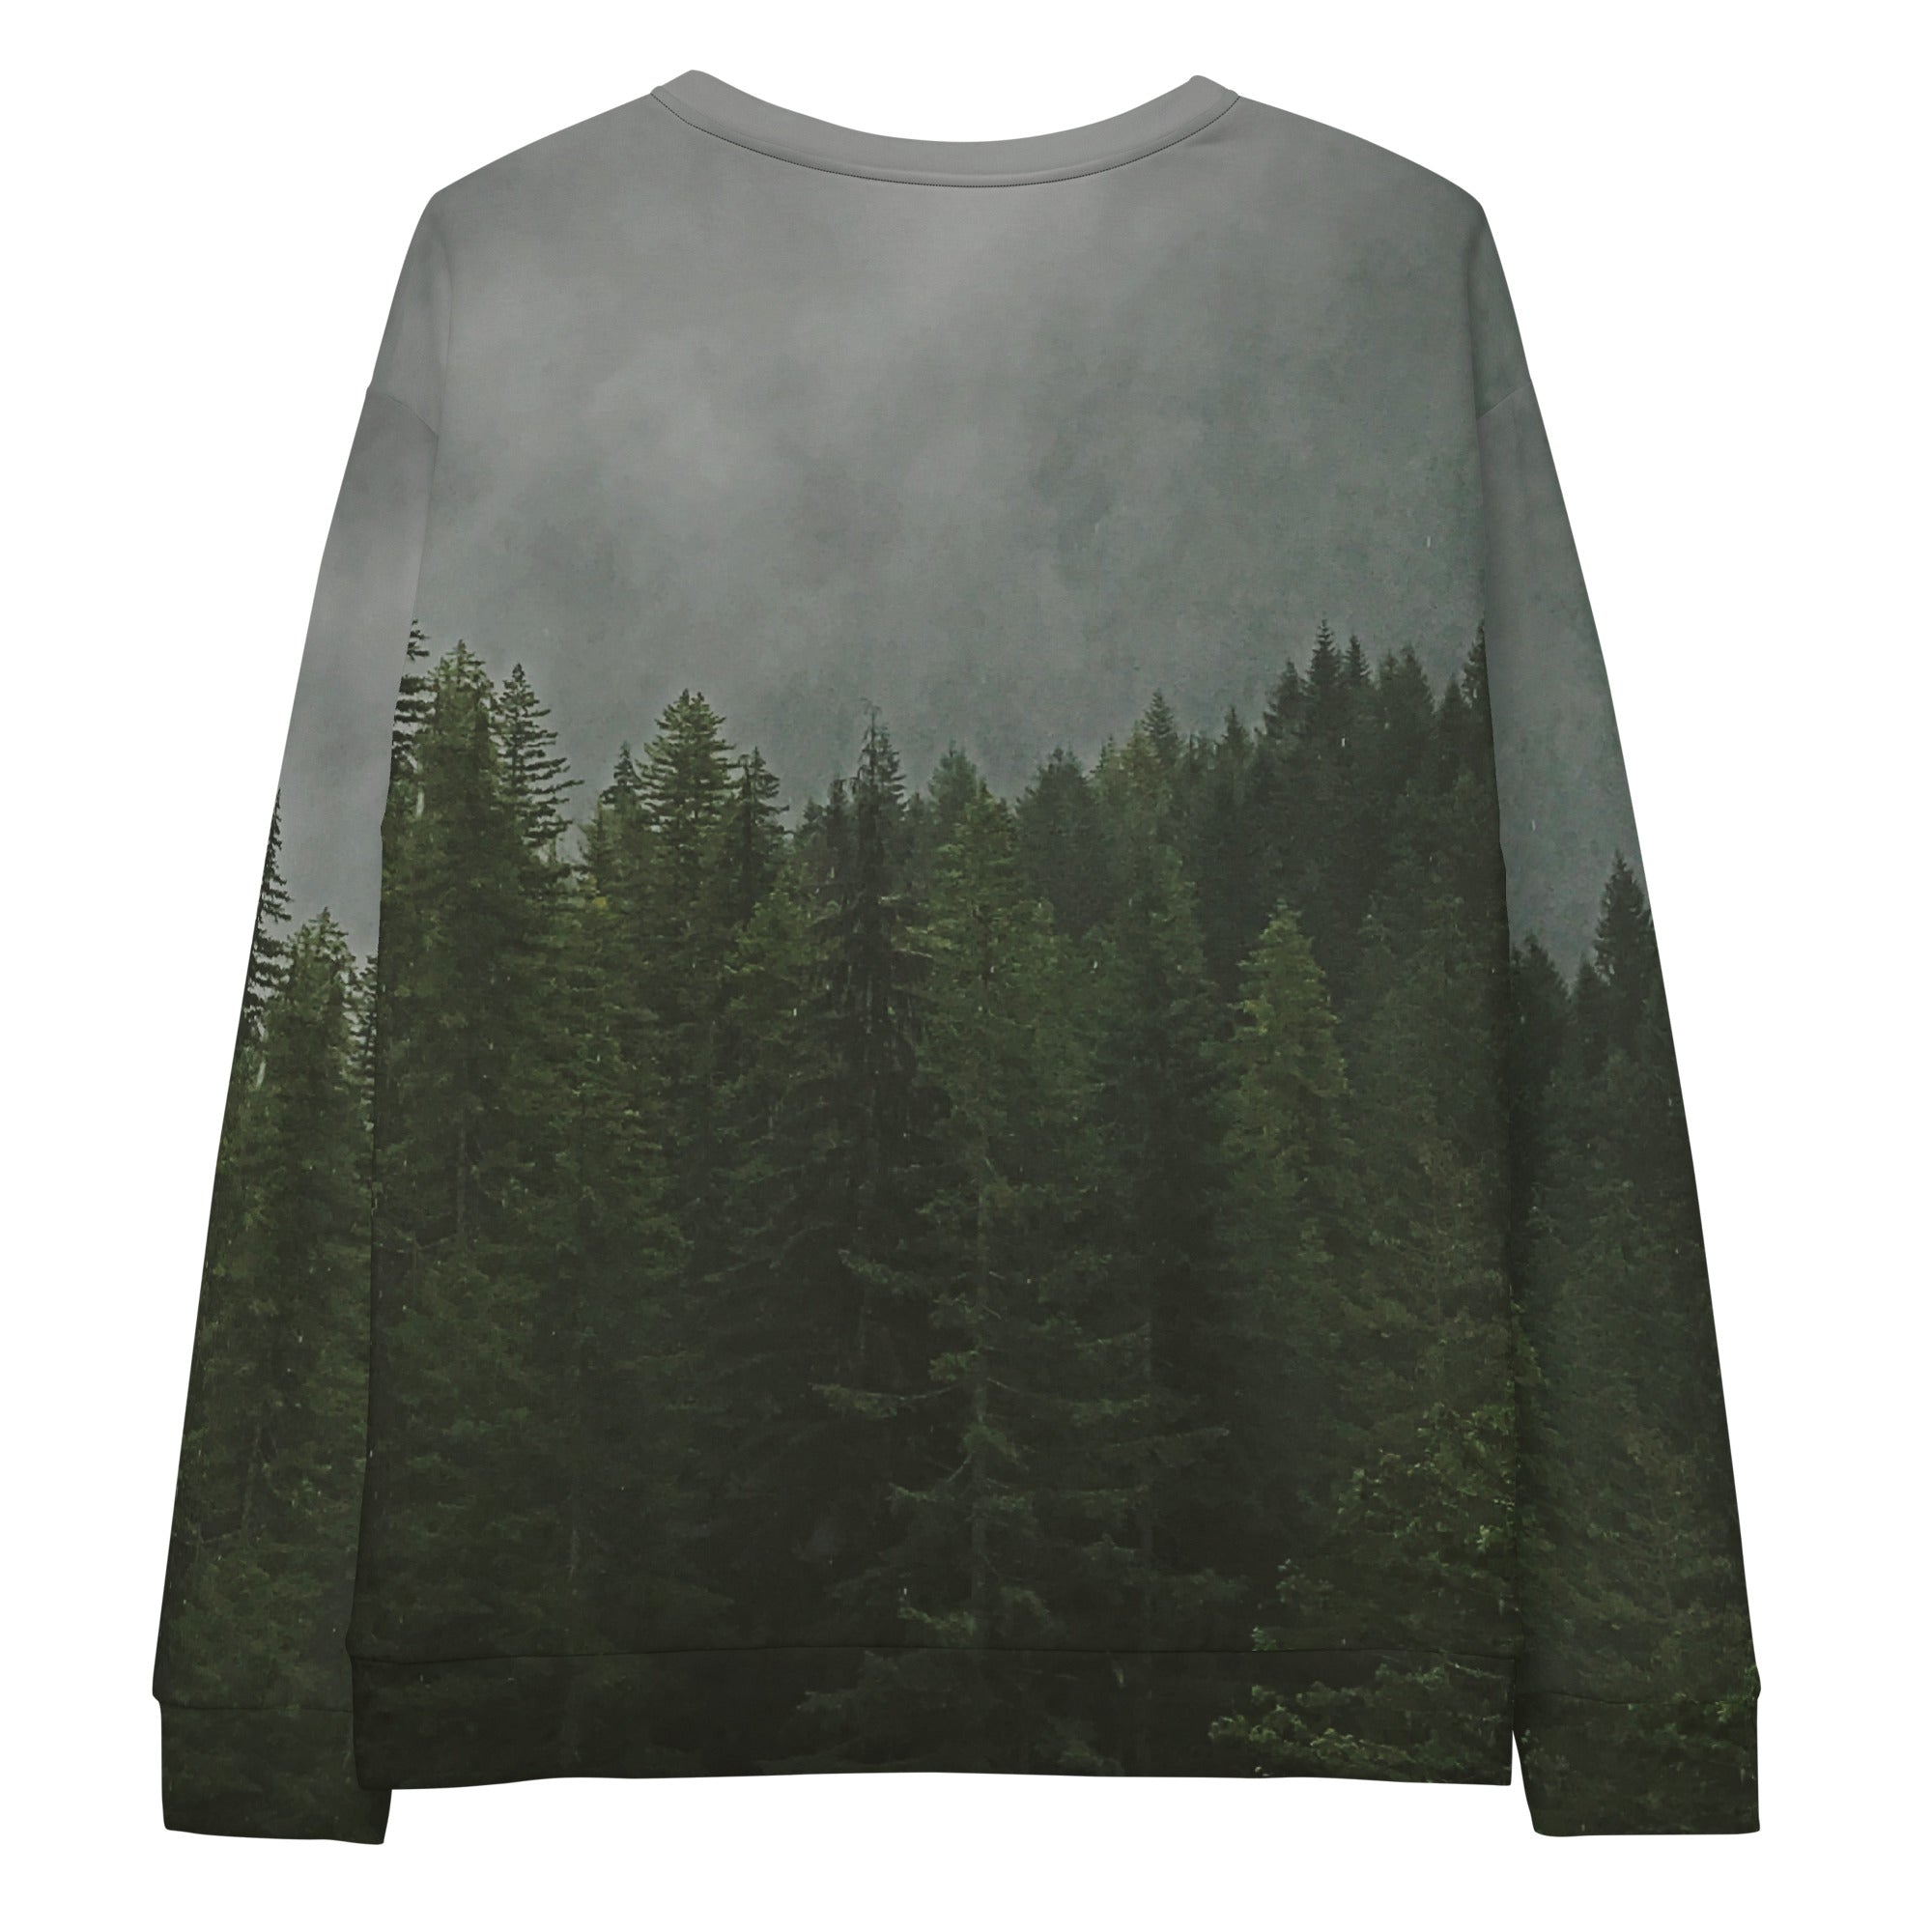 Misty Trees Sweater